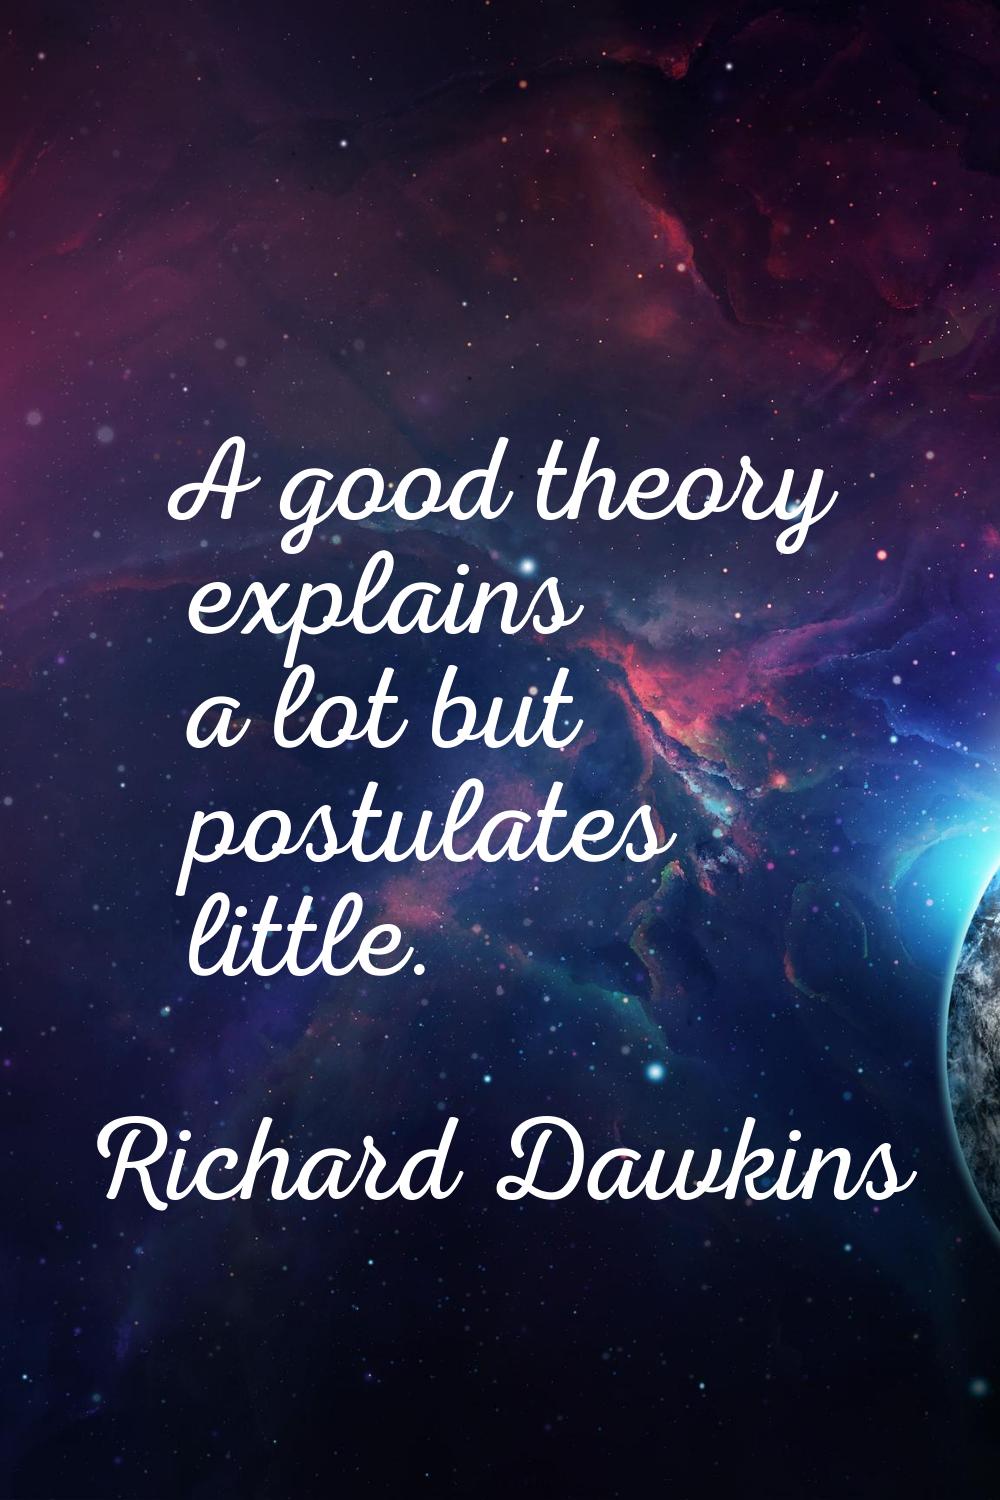 A good theory explains a lot but postulates little.